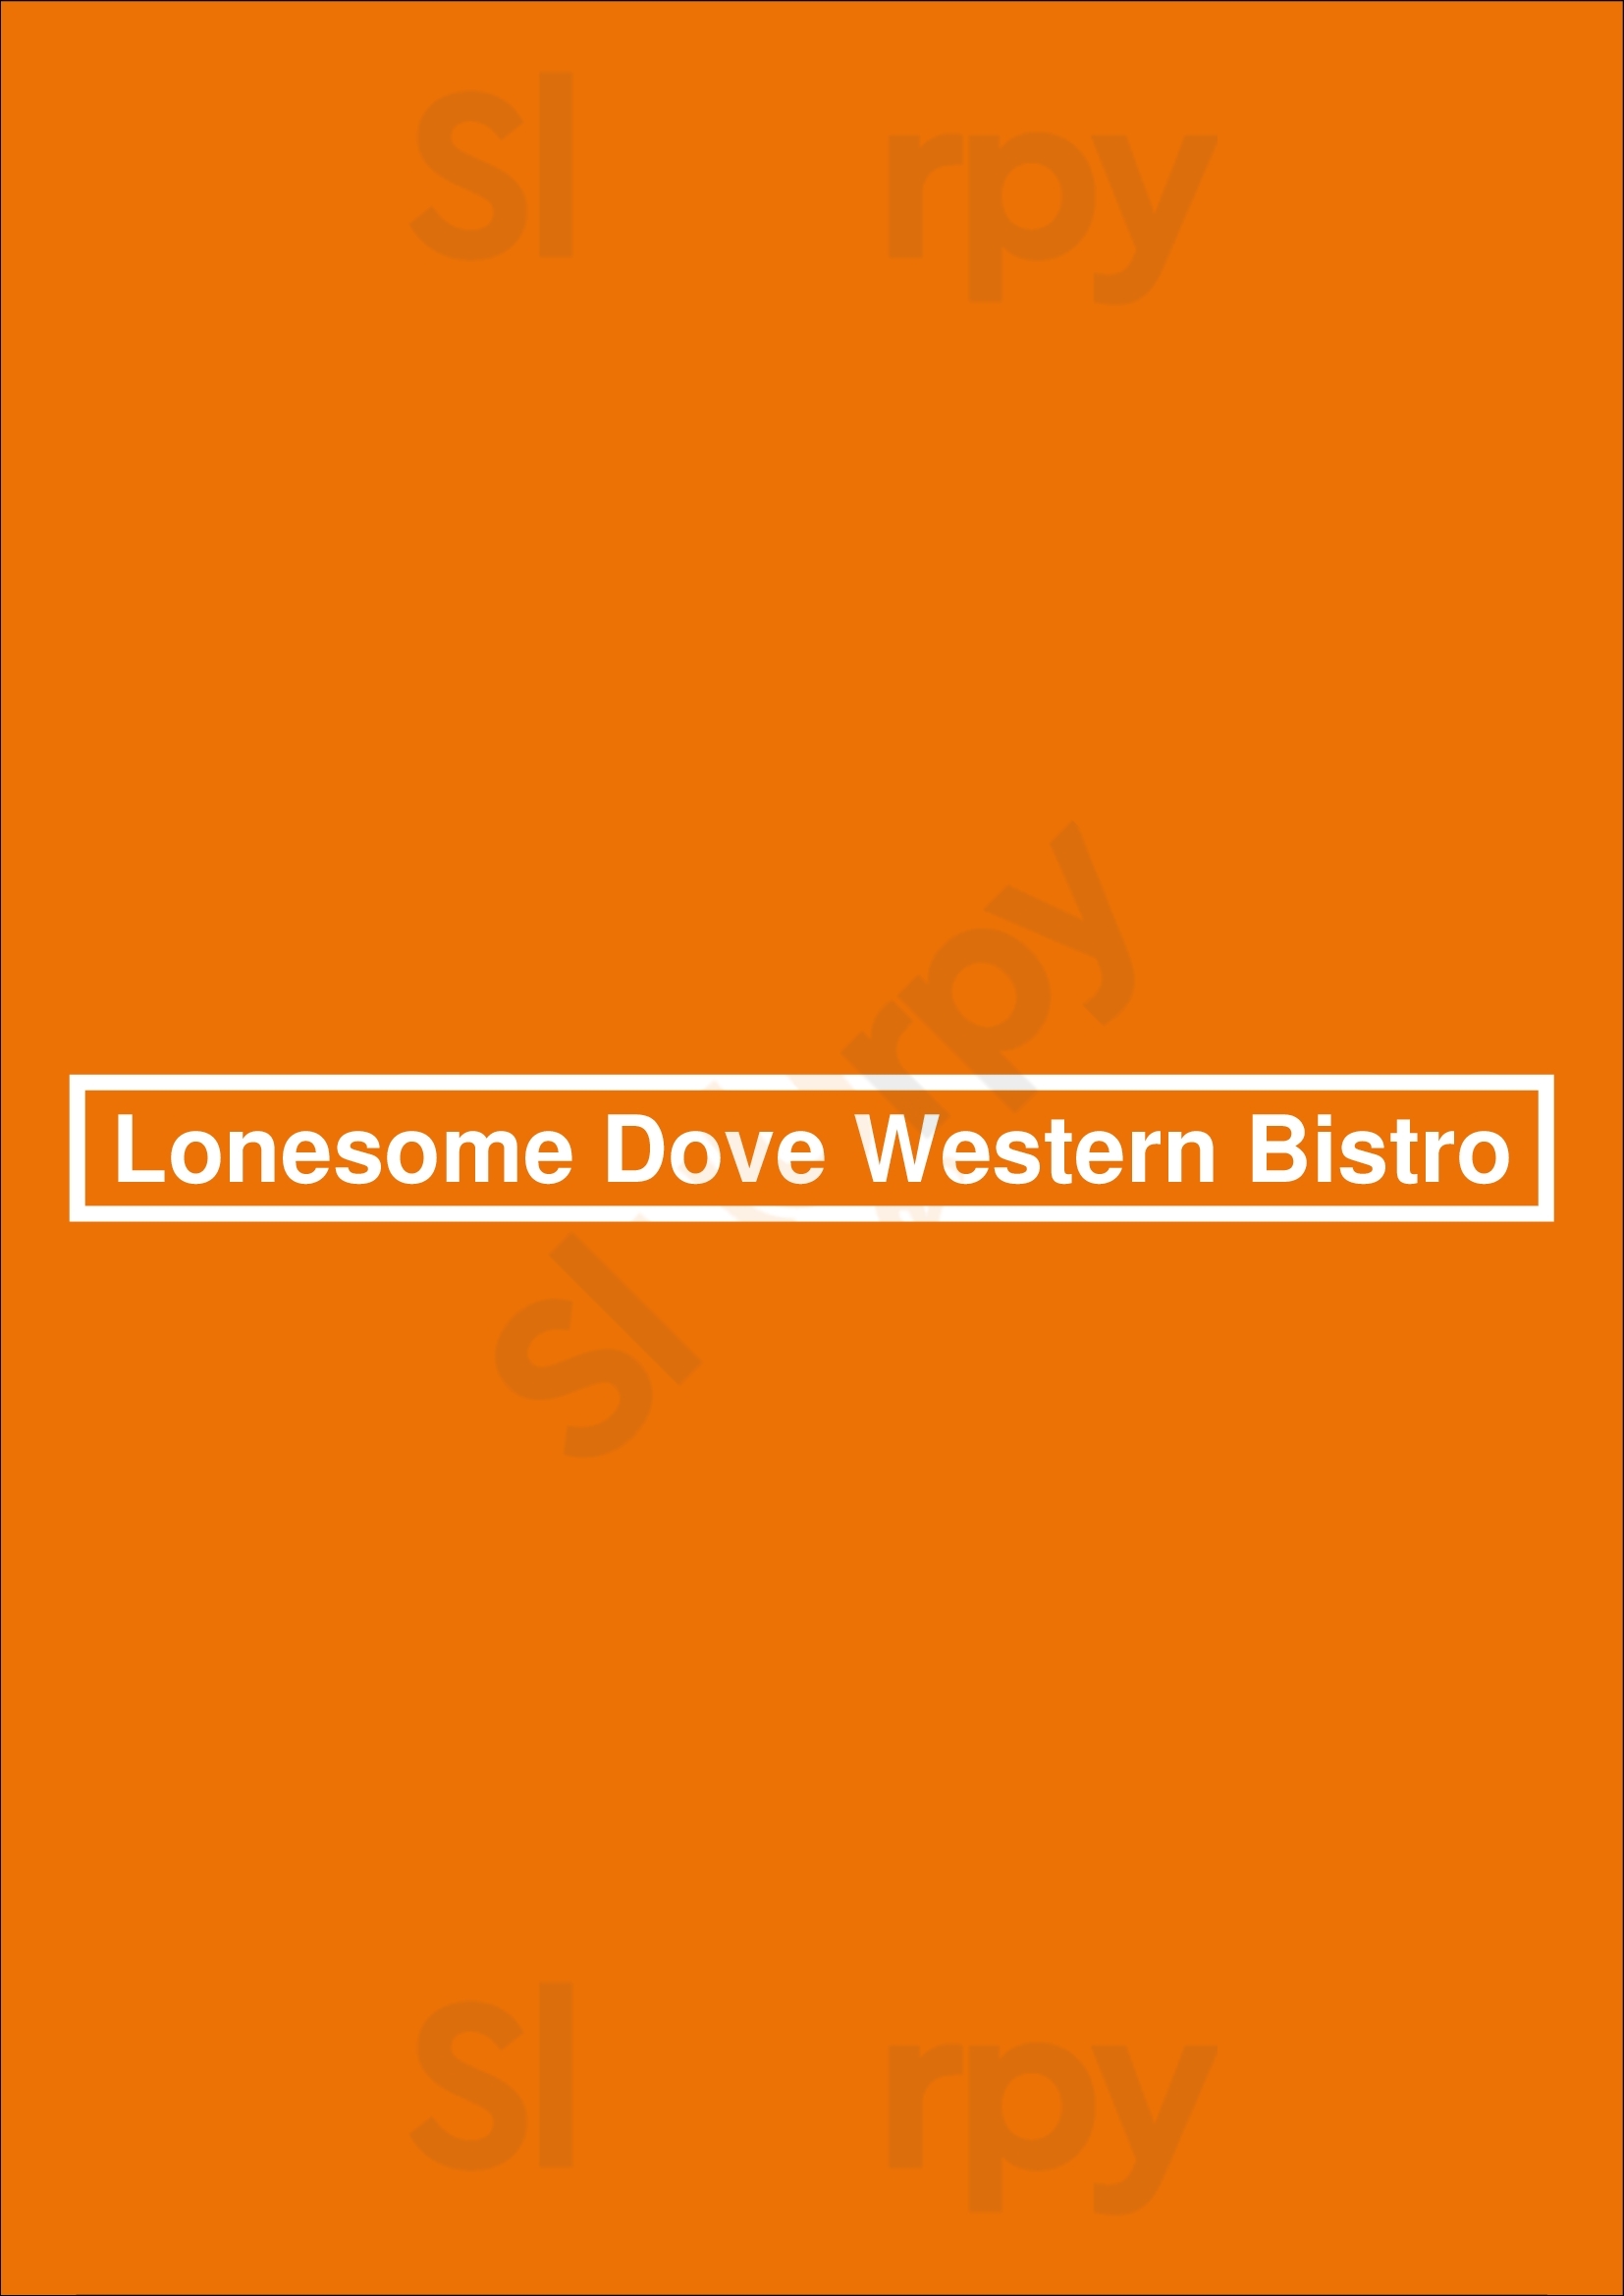 Lonesome Dove Western Bistro Austin Menu - 1